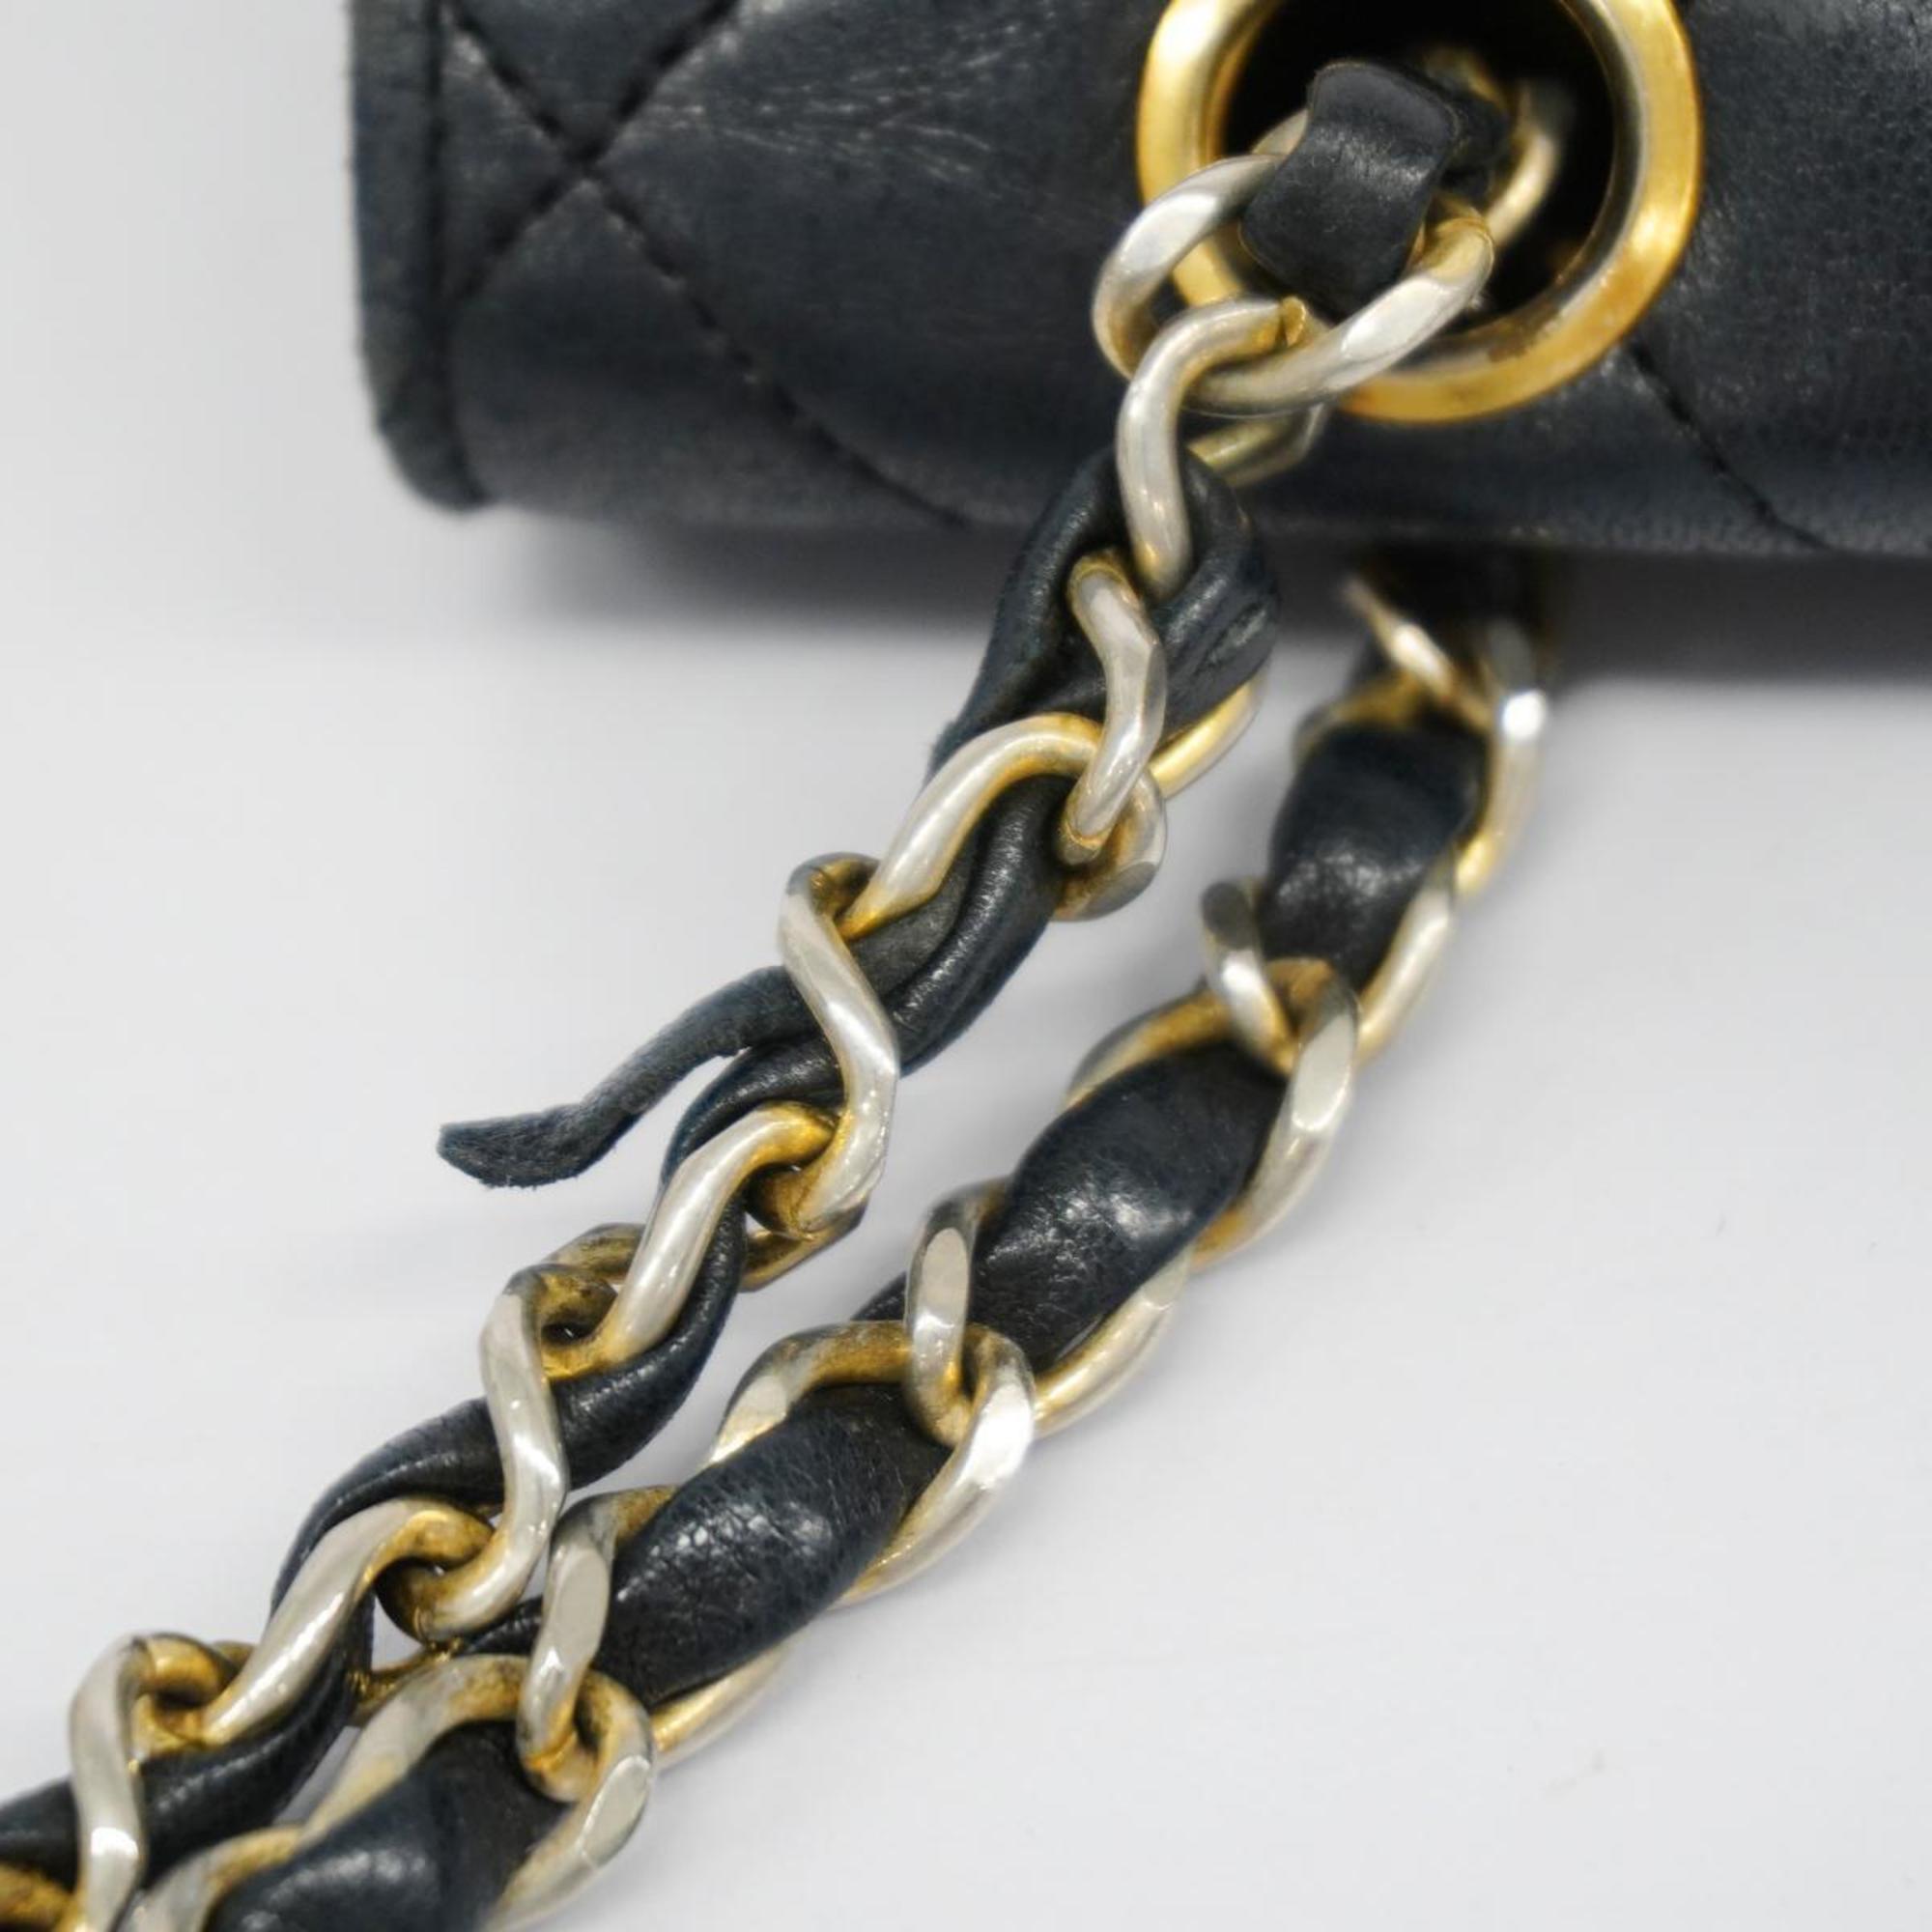 Chanel Shoulder Bag Matelasse Chain Lambskin Black Women's